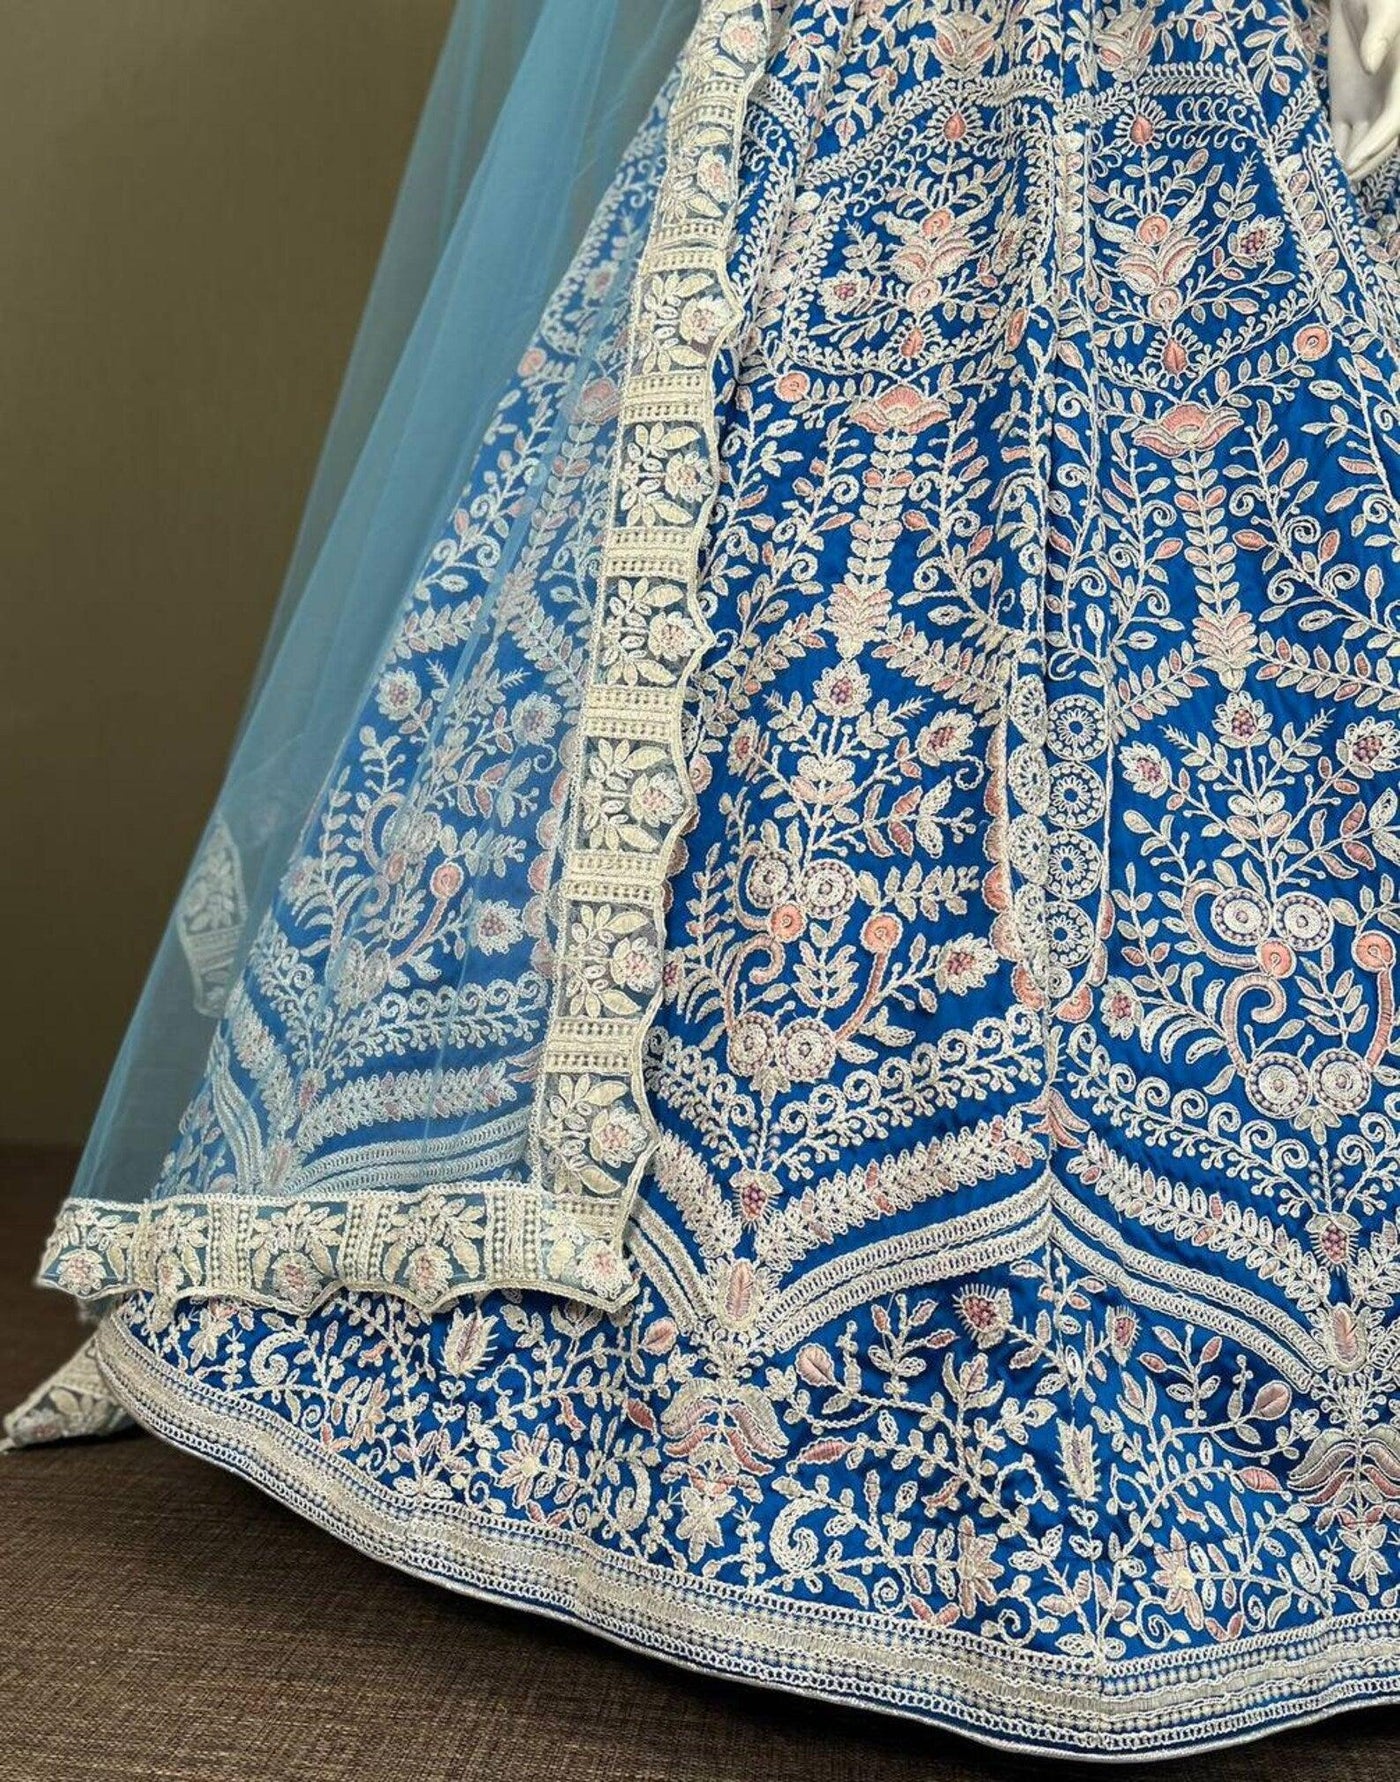 sabyasachi designer blue lehenga choli for women with heavy thread embroidery work wedding wear party wear, lehenga choli - Uboric